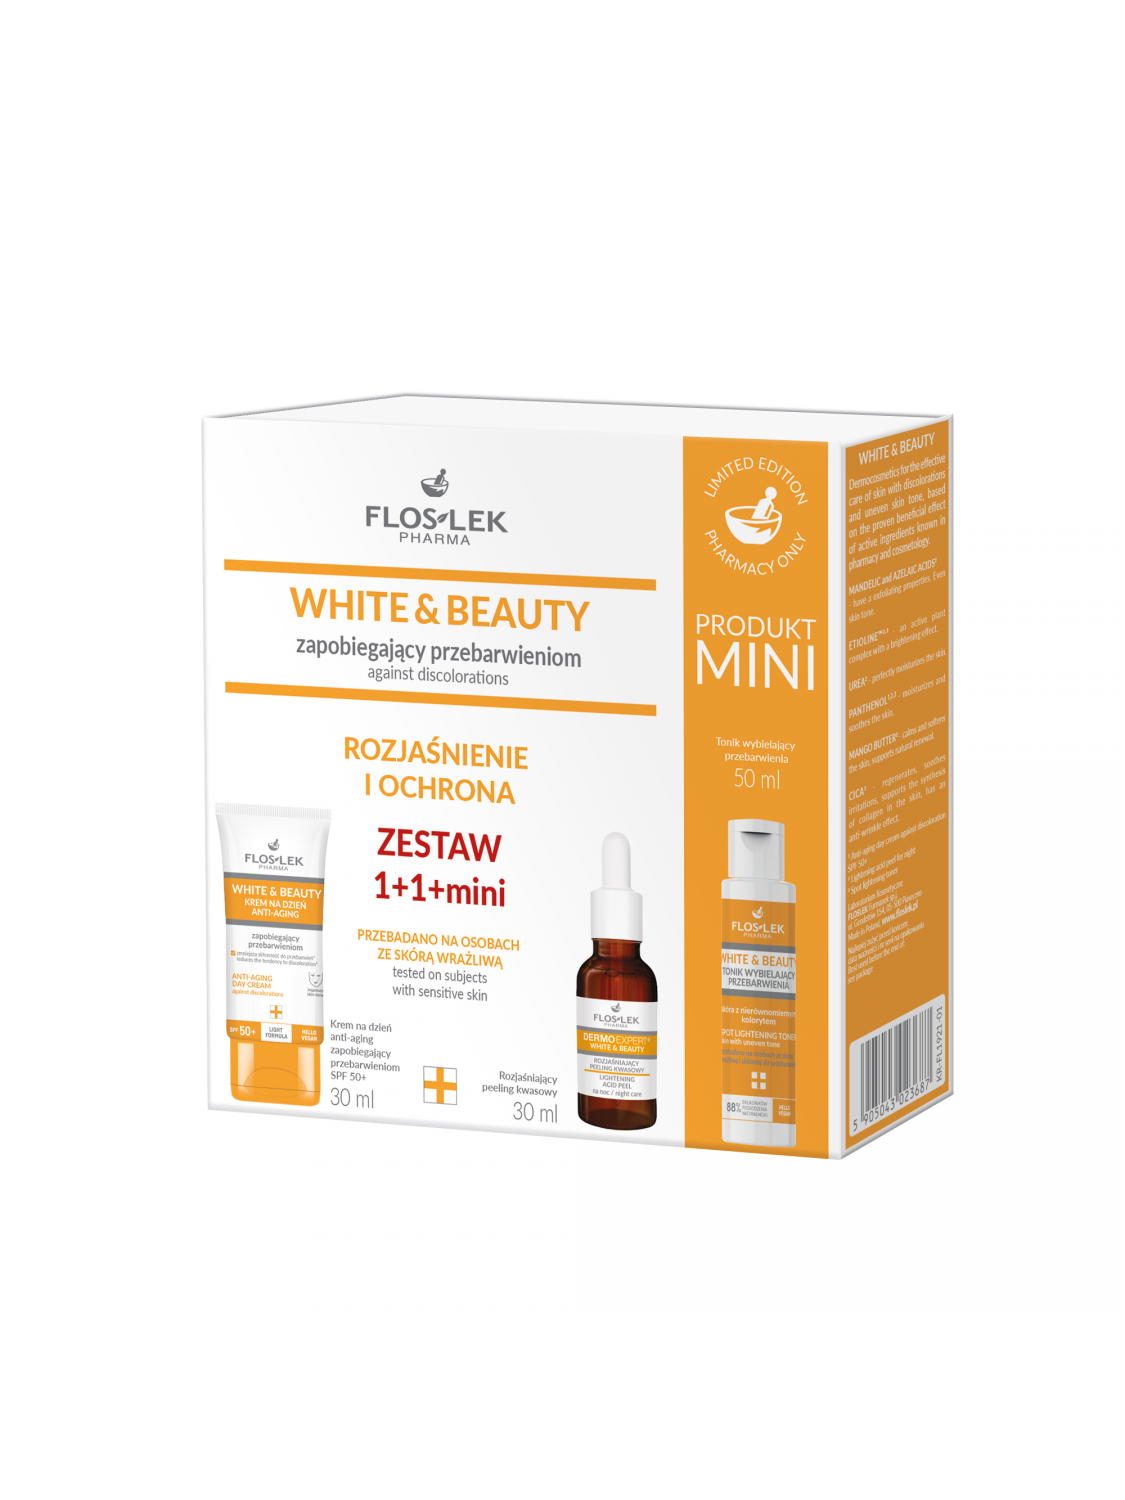 WHITE&BEAUTY WHITE&BEAUTY anti-pigmentation set - Brightening and protection 1 +1 + mini - Floslek